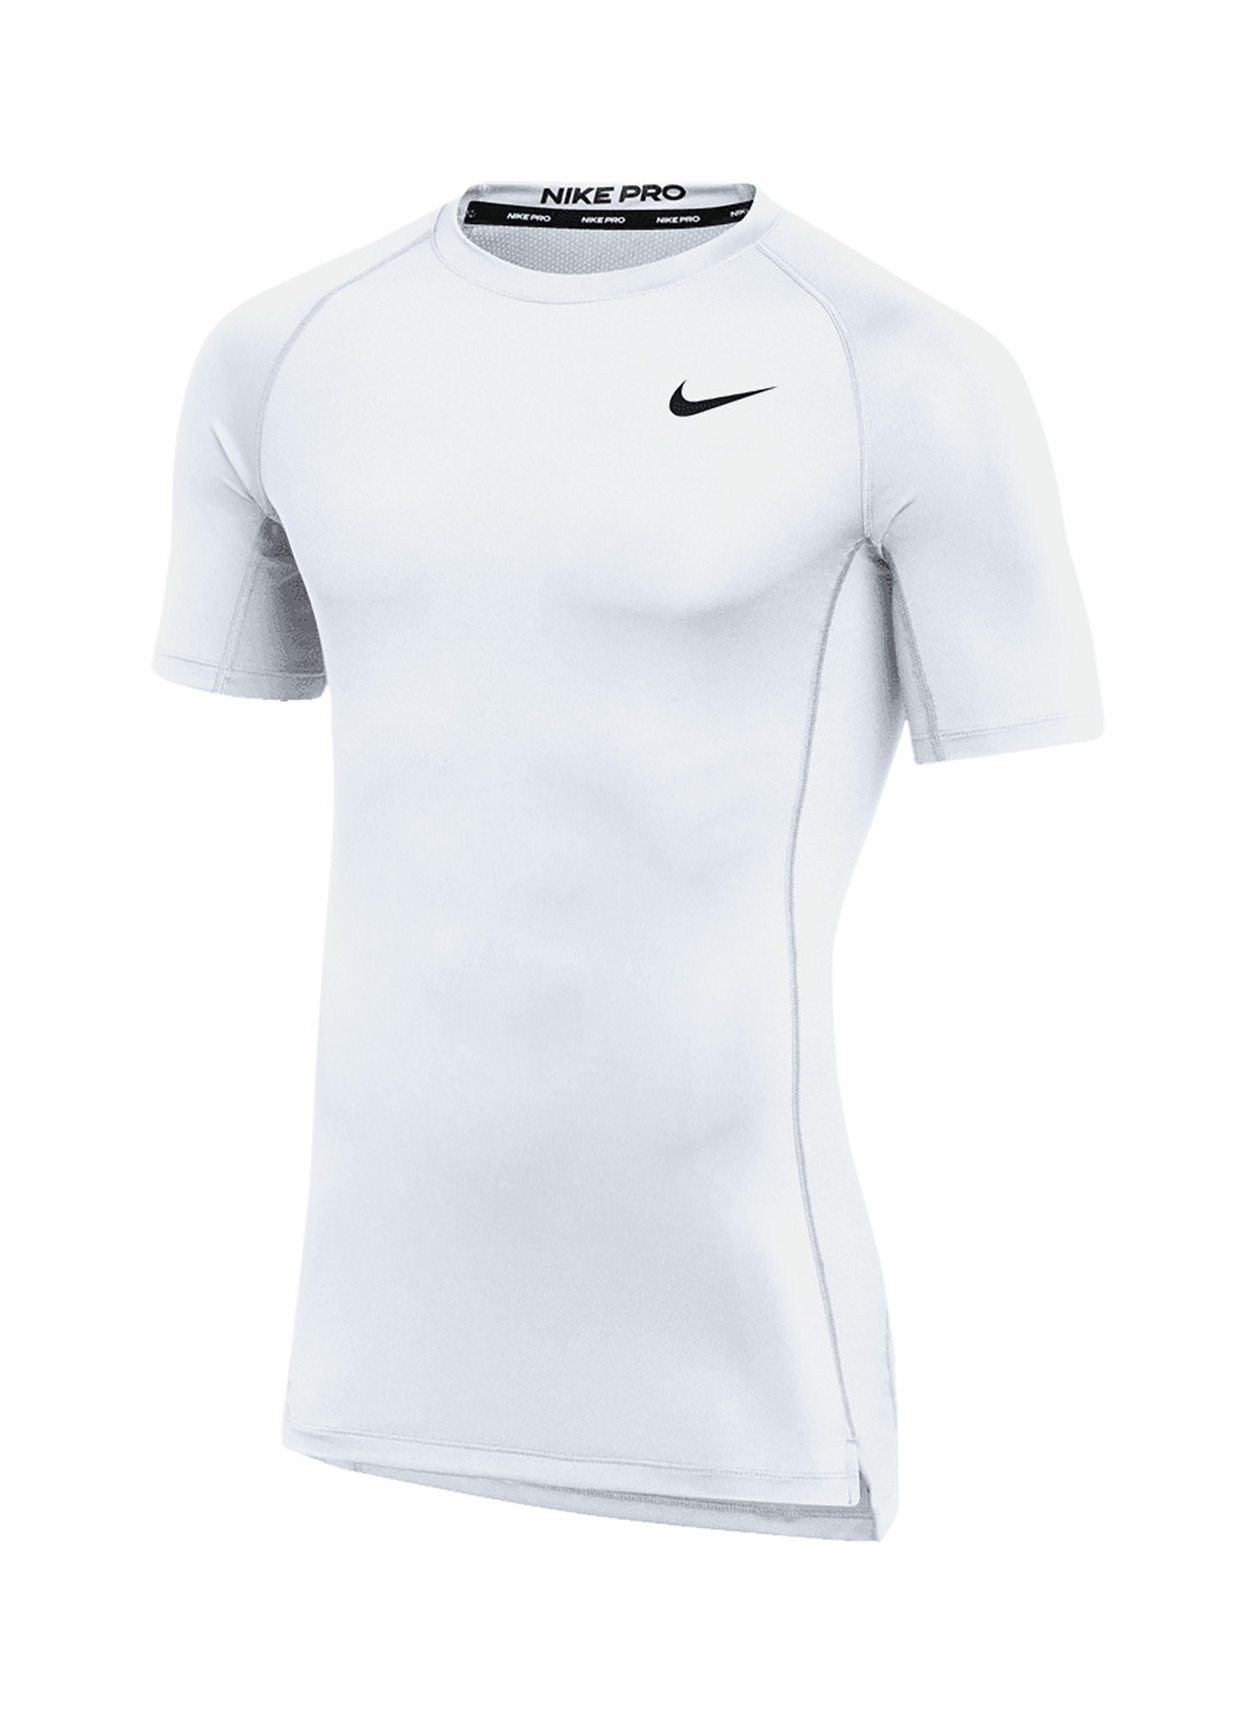 Embroidered Nike Men's White / Black Pro Tight T-Shirt | Company T-shirts